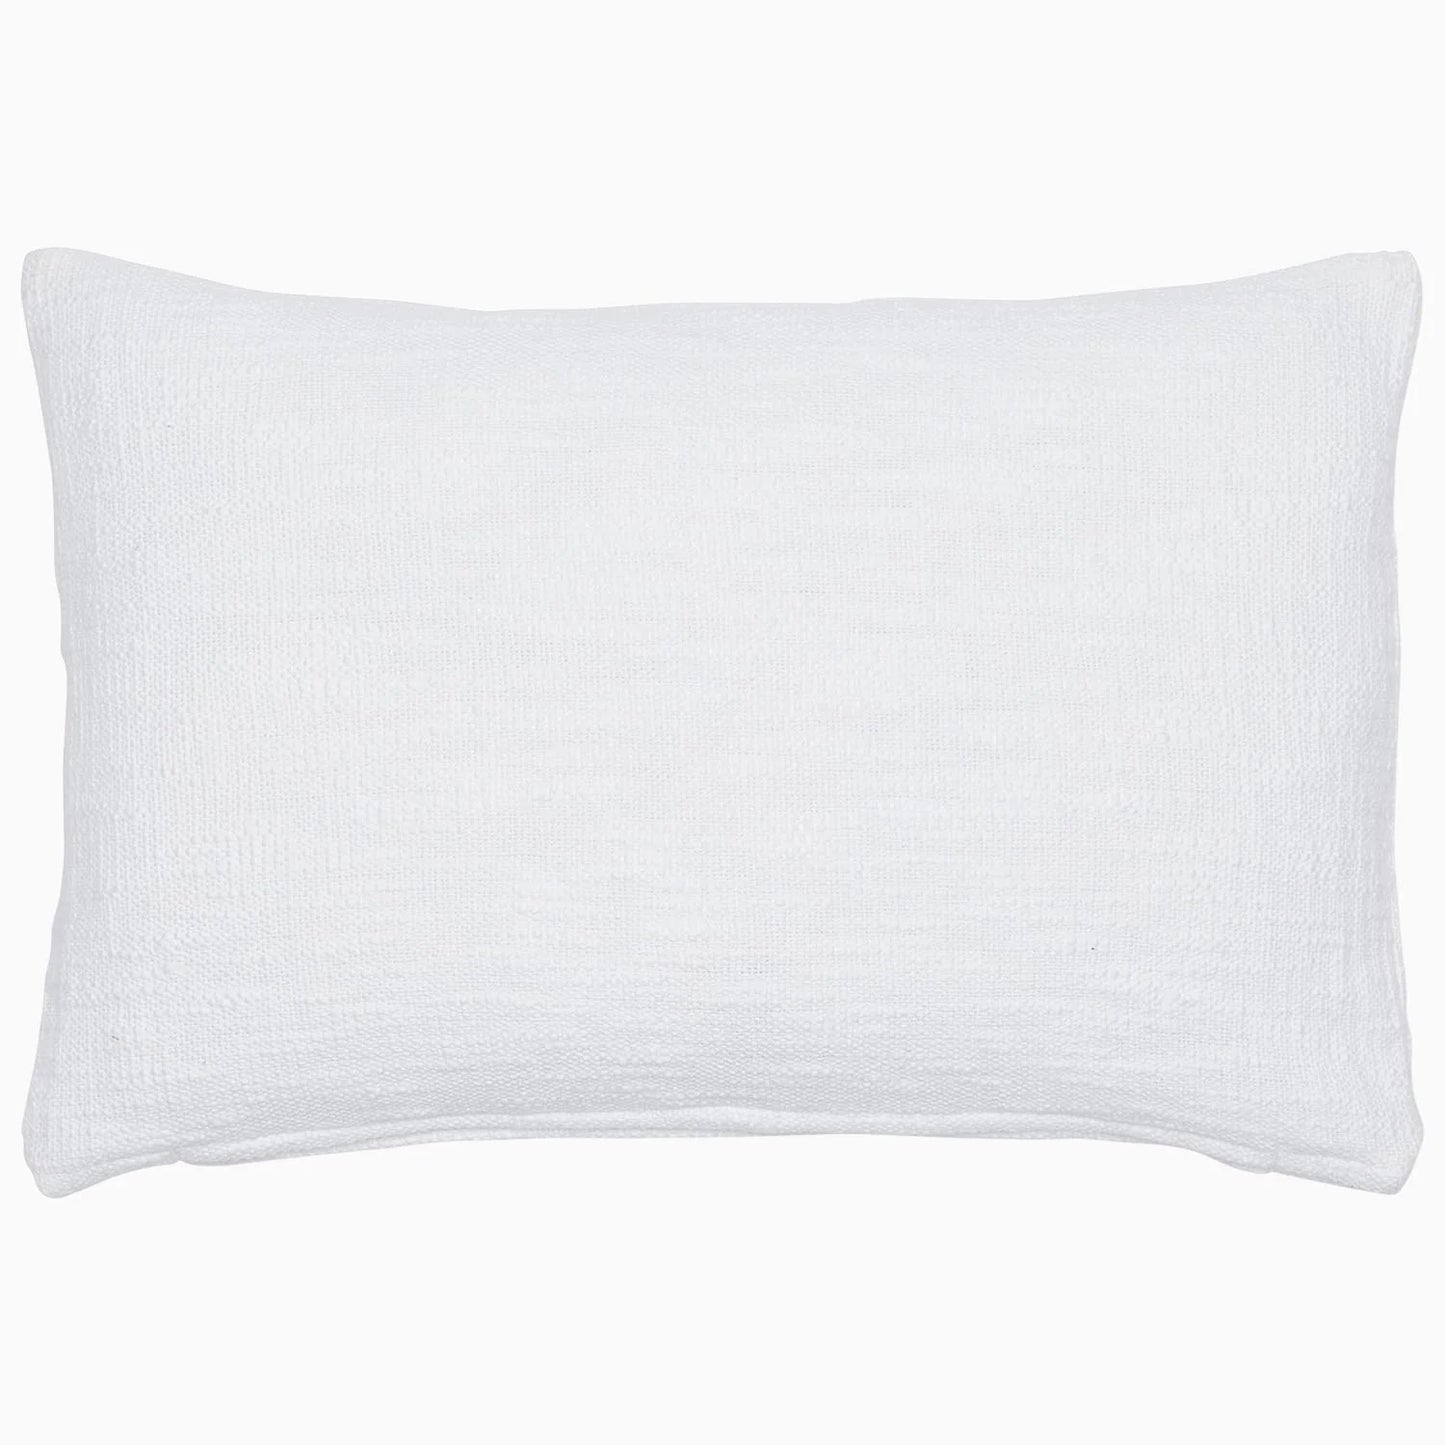 John Robshaw Woven White Kidney Pillow